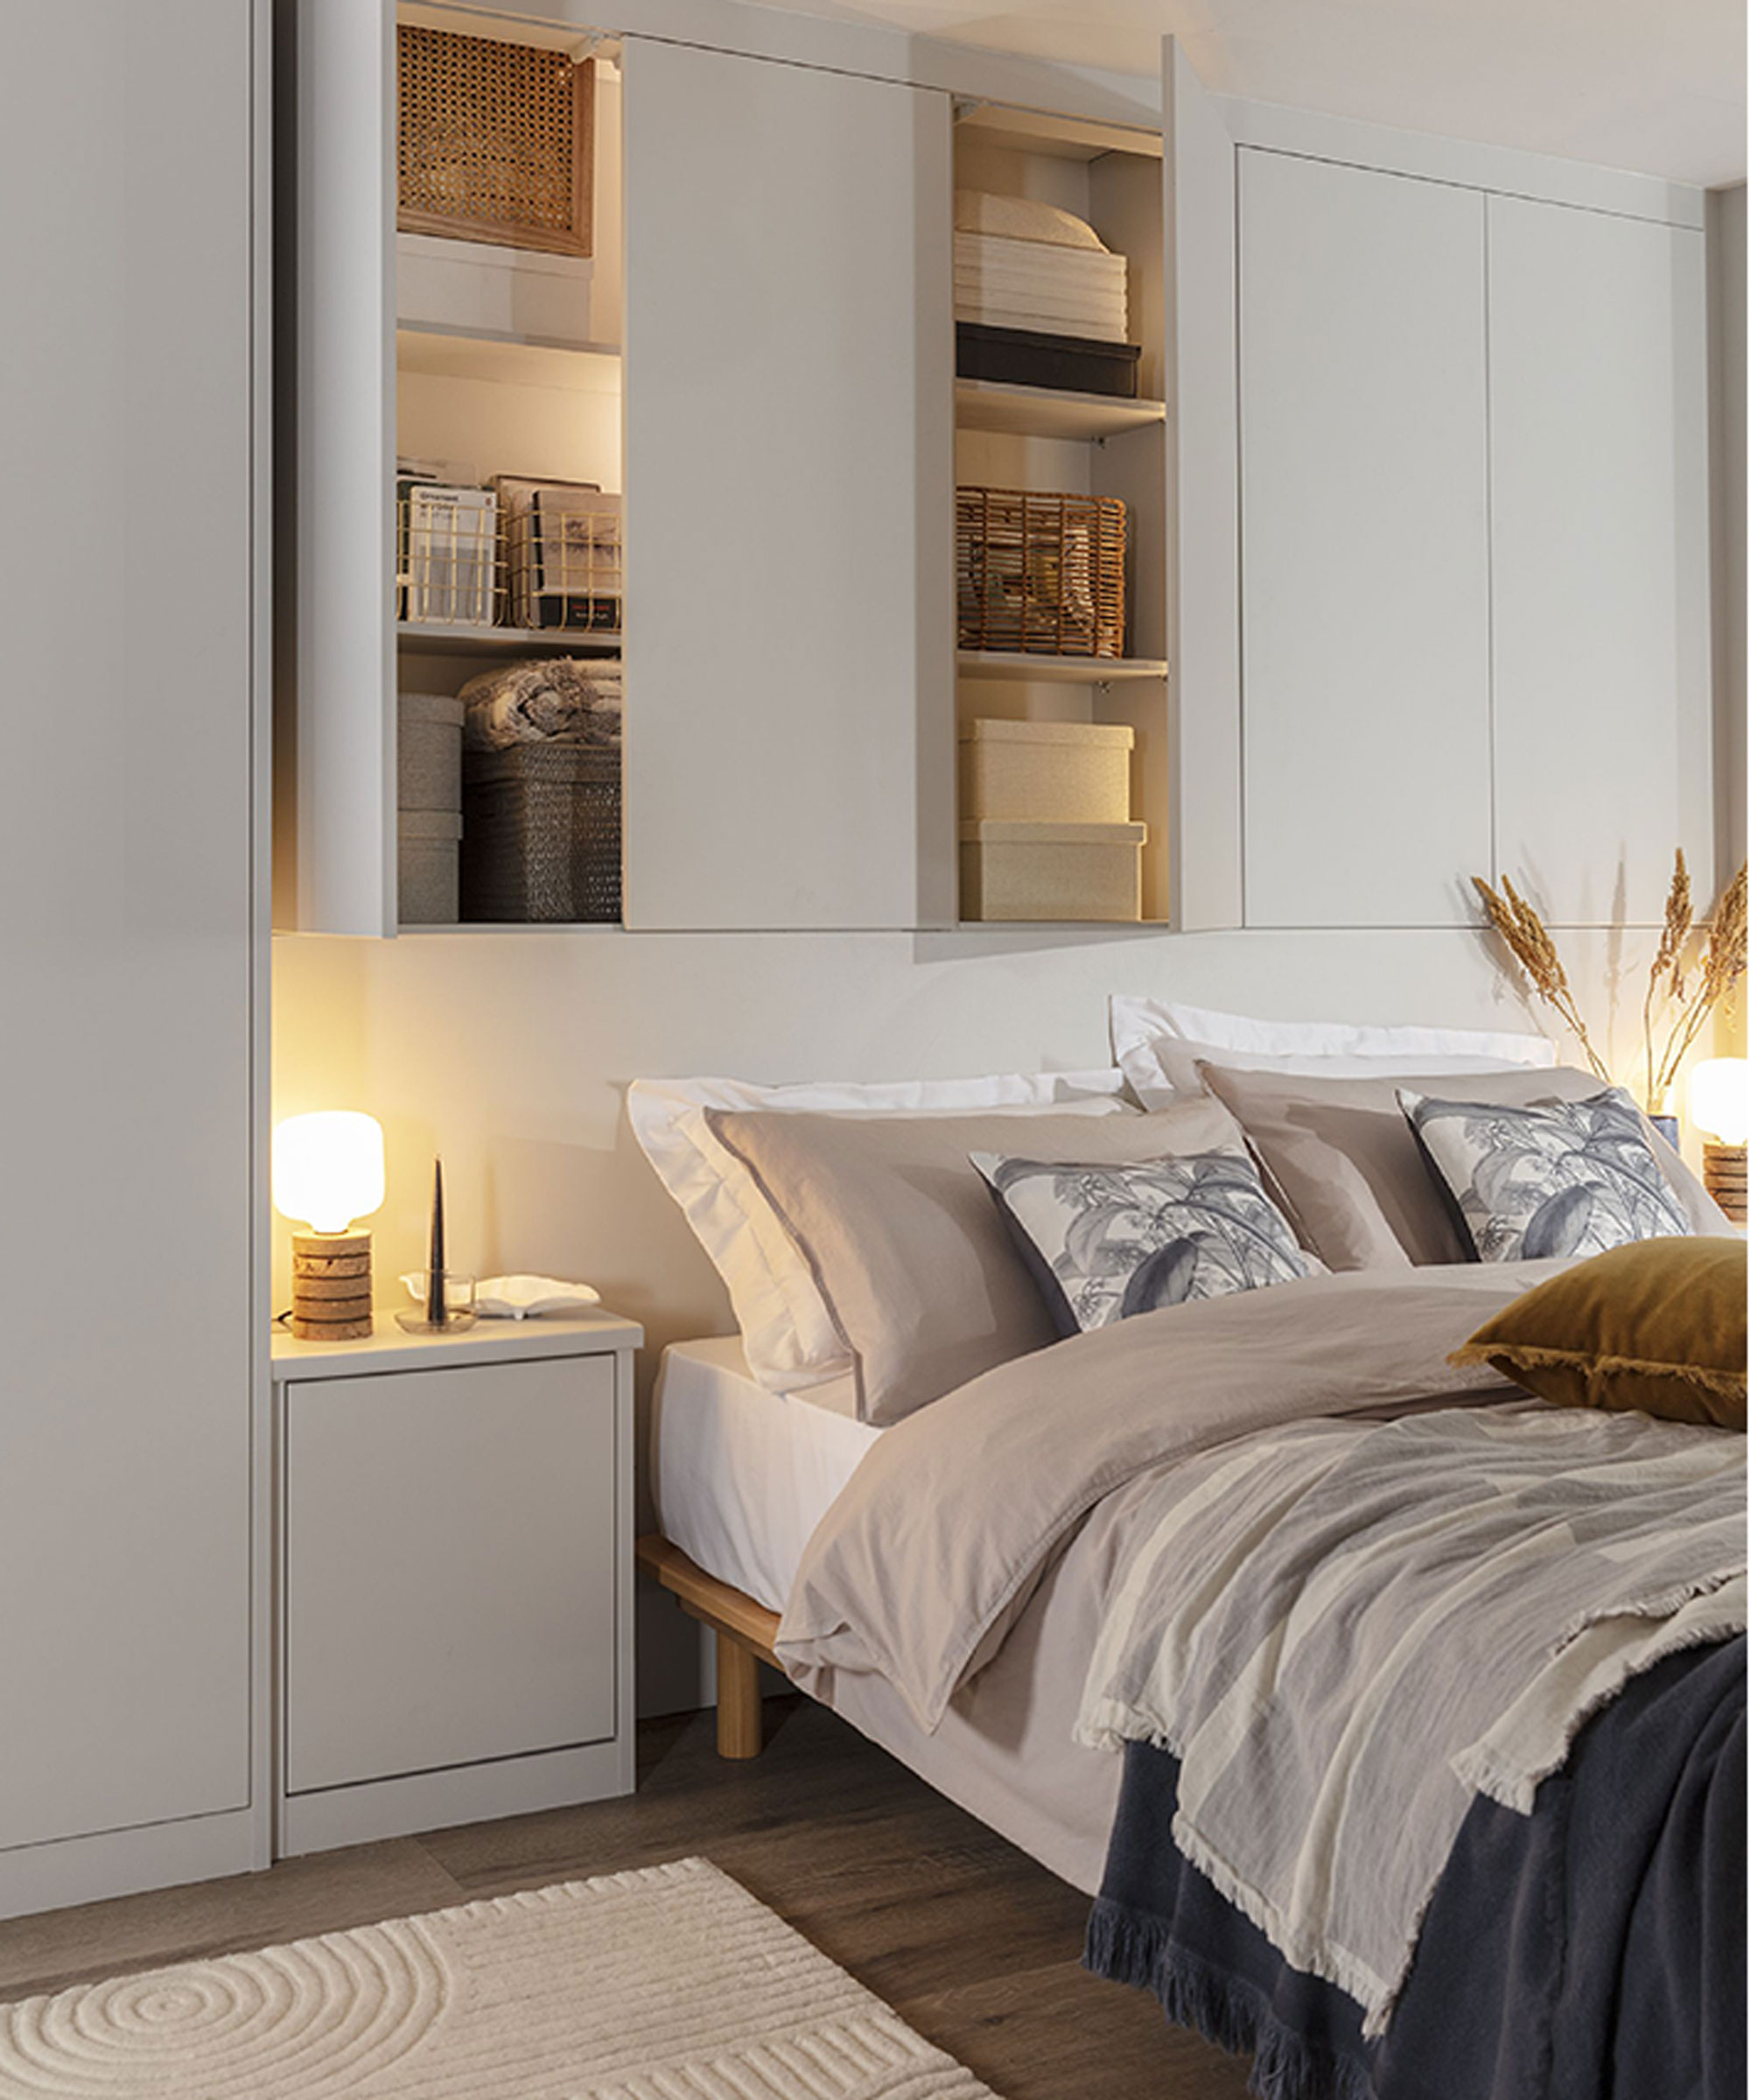 Bedroom Storage Shelves - Above the Bed Storage